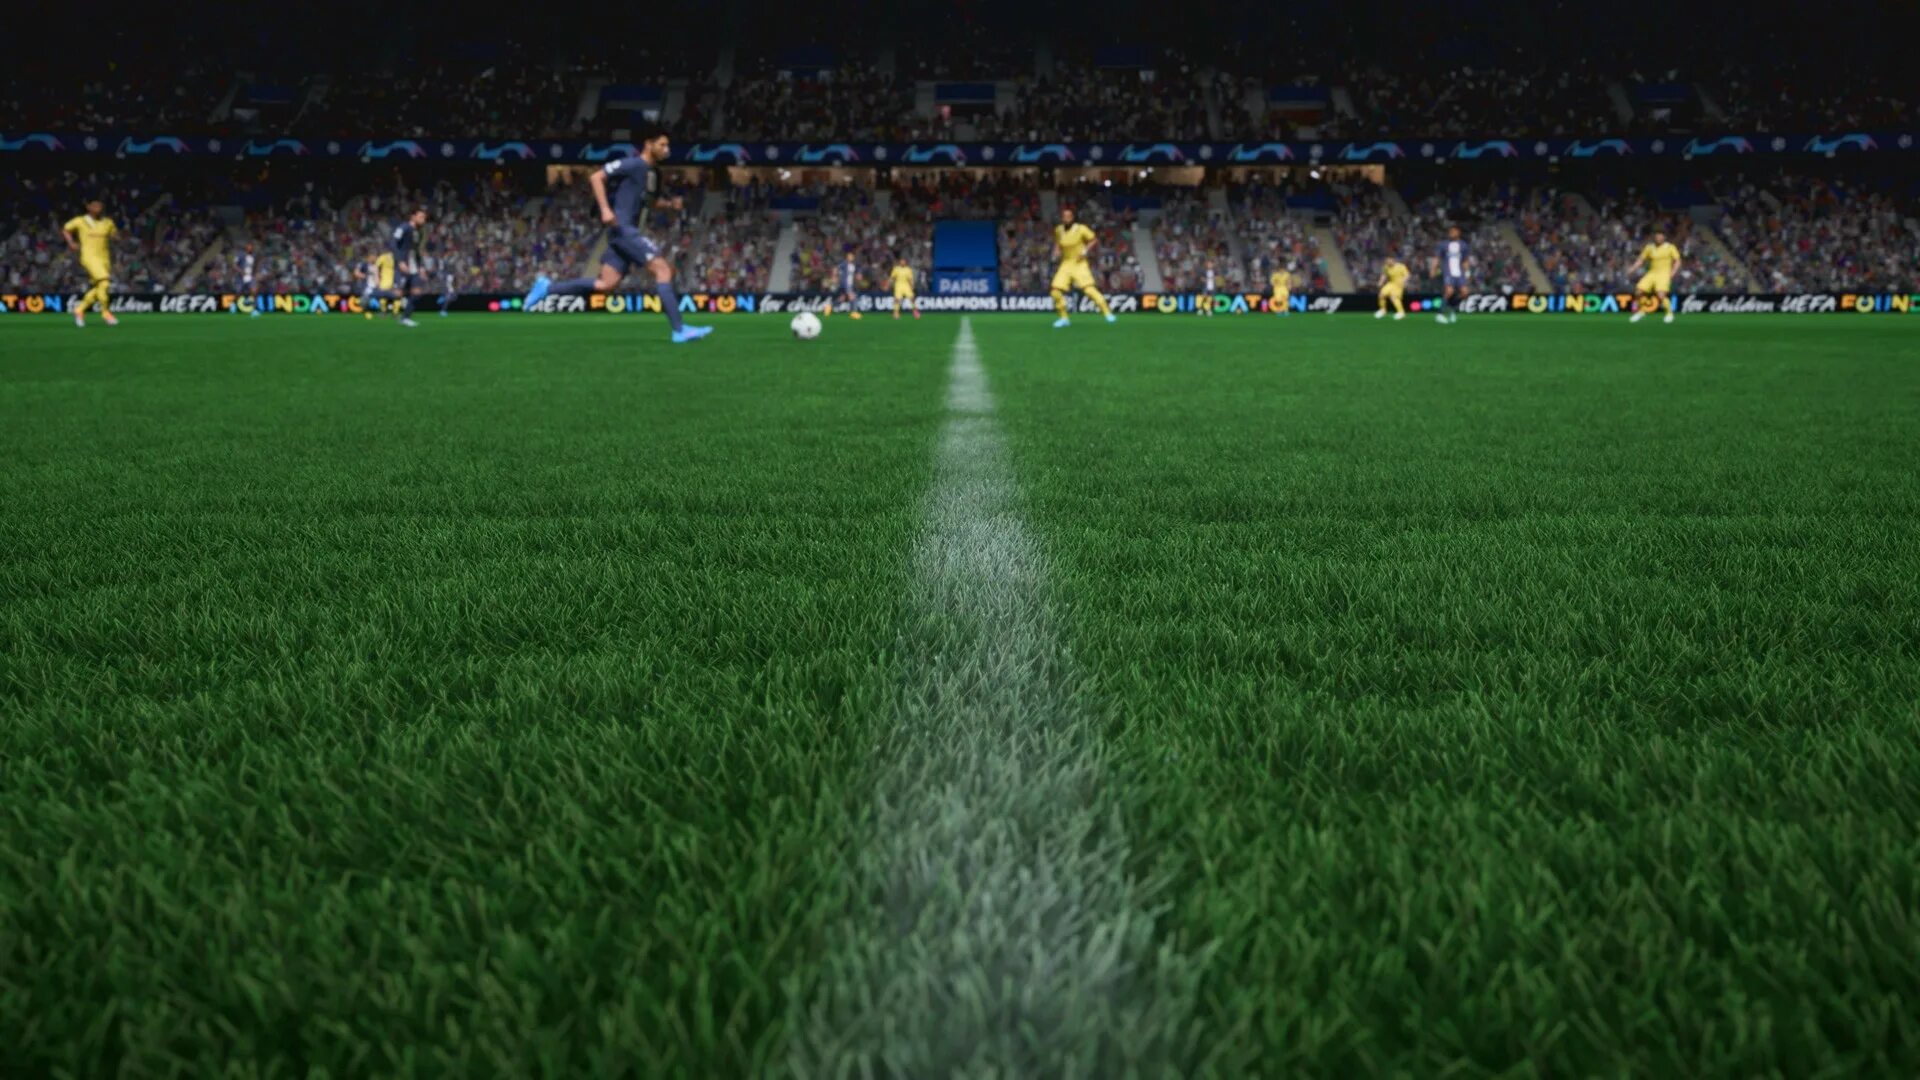 Fifa 23 switch. FIFA 23. Фон ФИФА 23. FIFA 23 системные требования. Стадион от травы.